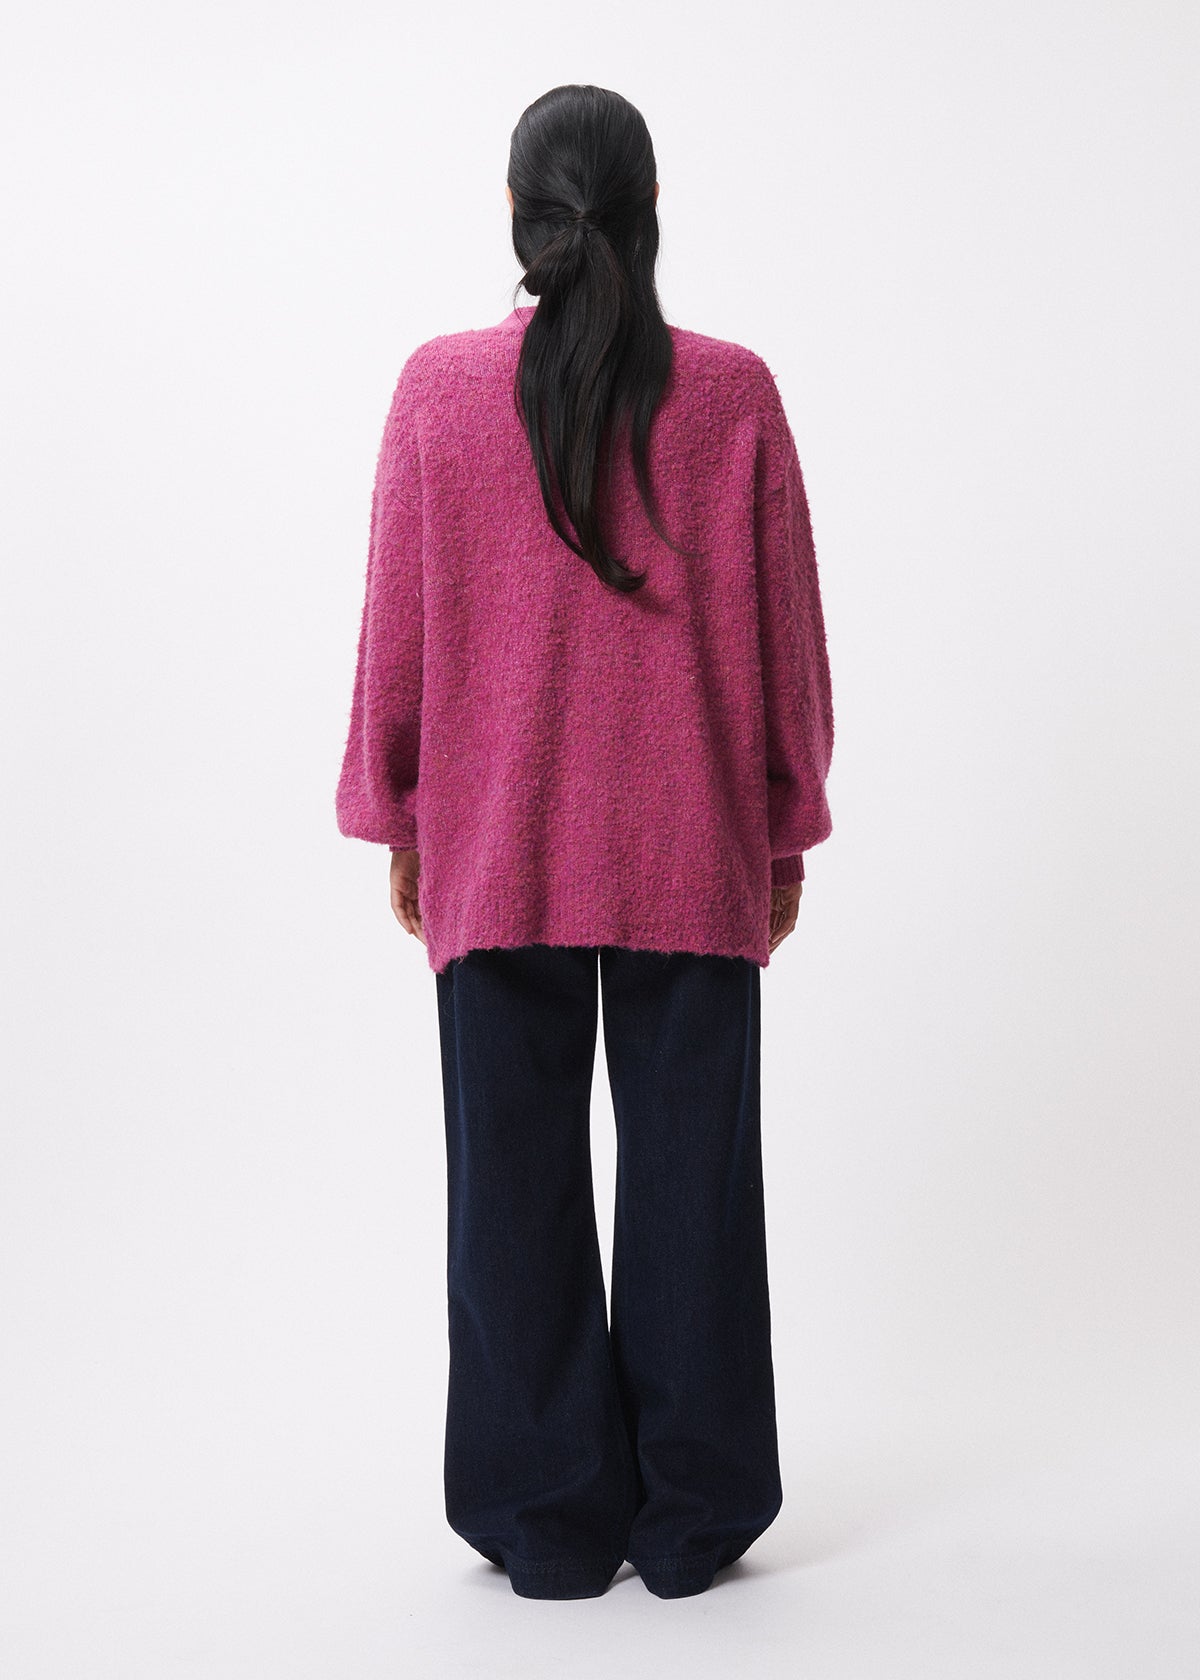 Frnch MS23-66 cardigan oversize en tricot rose